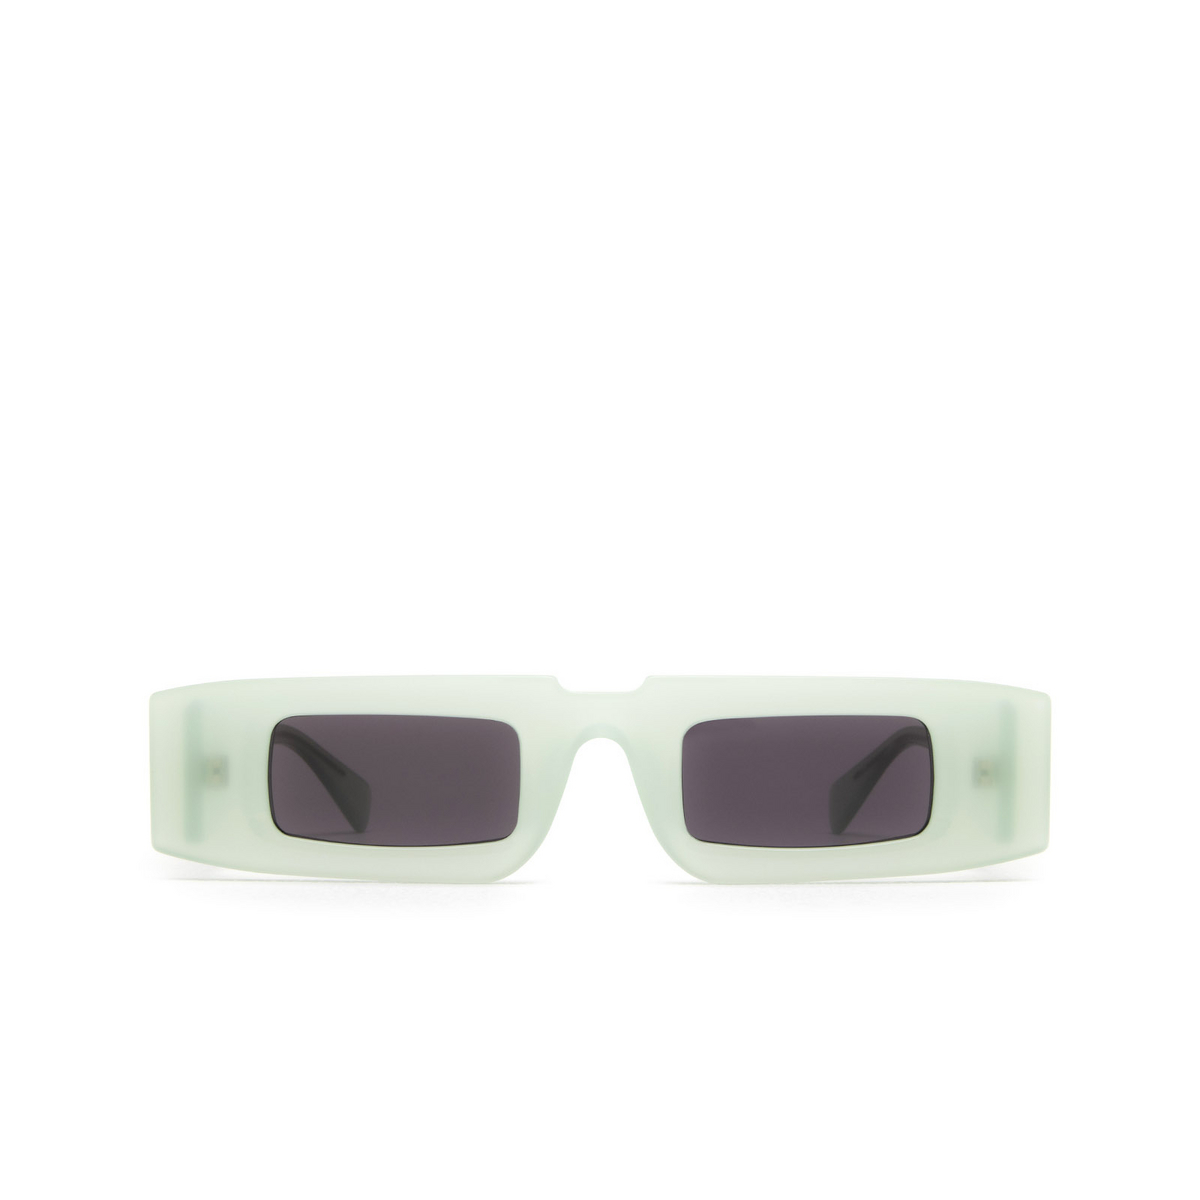 Kuboraum® Rectangle Sunglasses: X5 color Jade - front view.